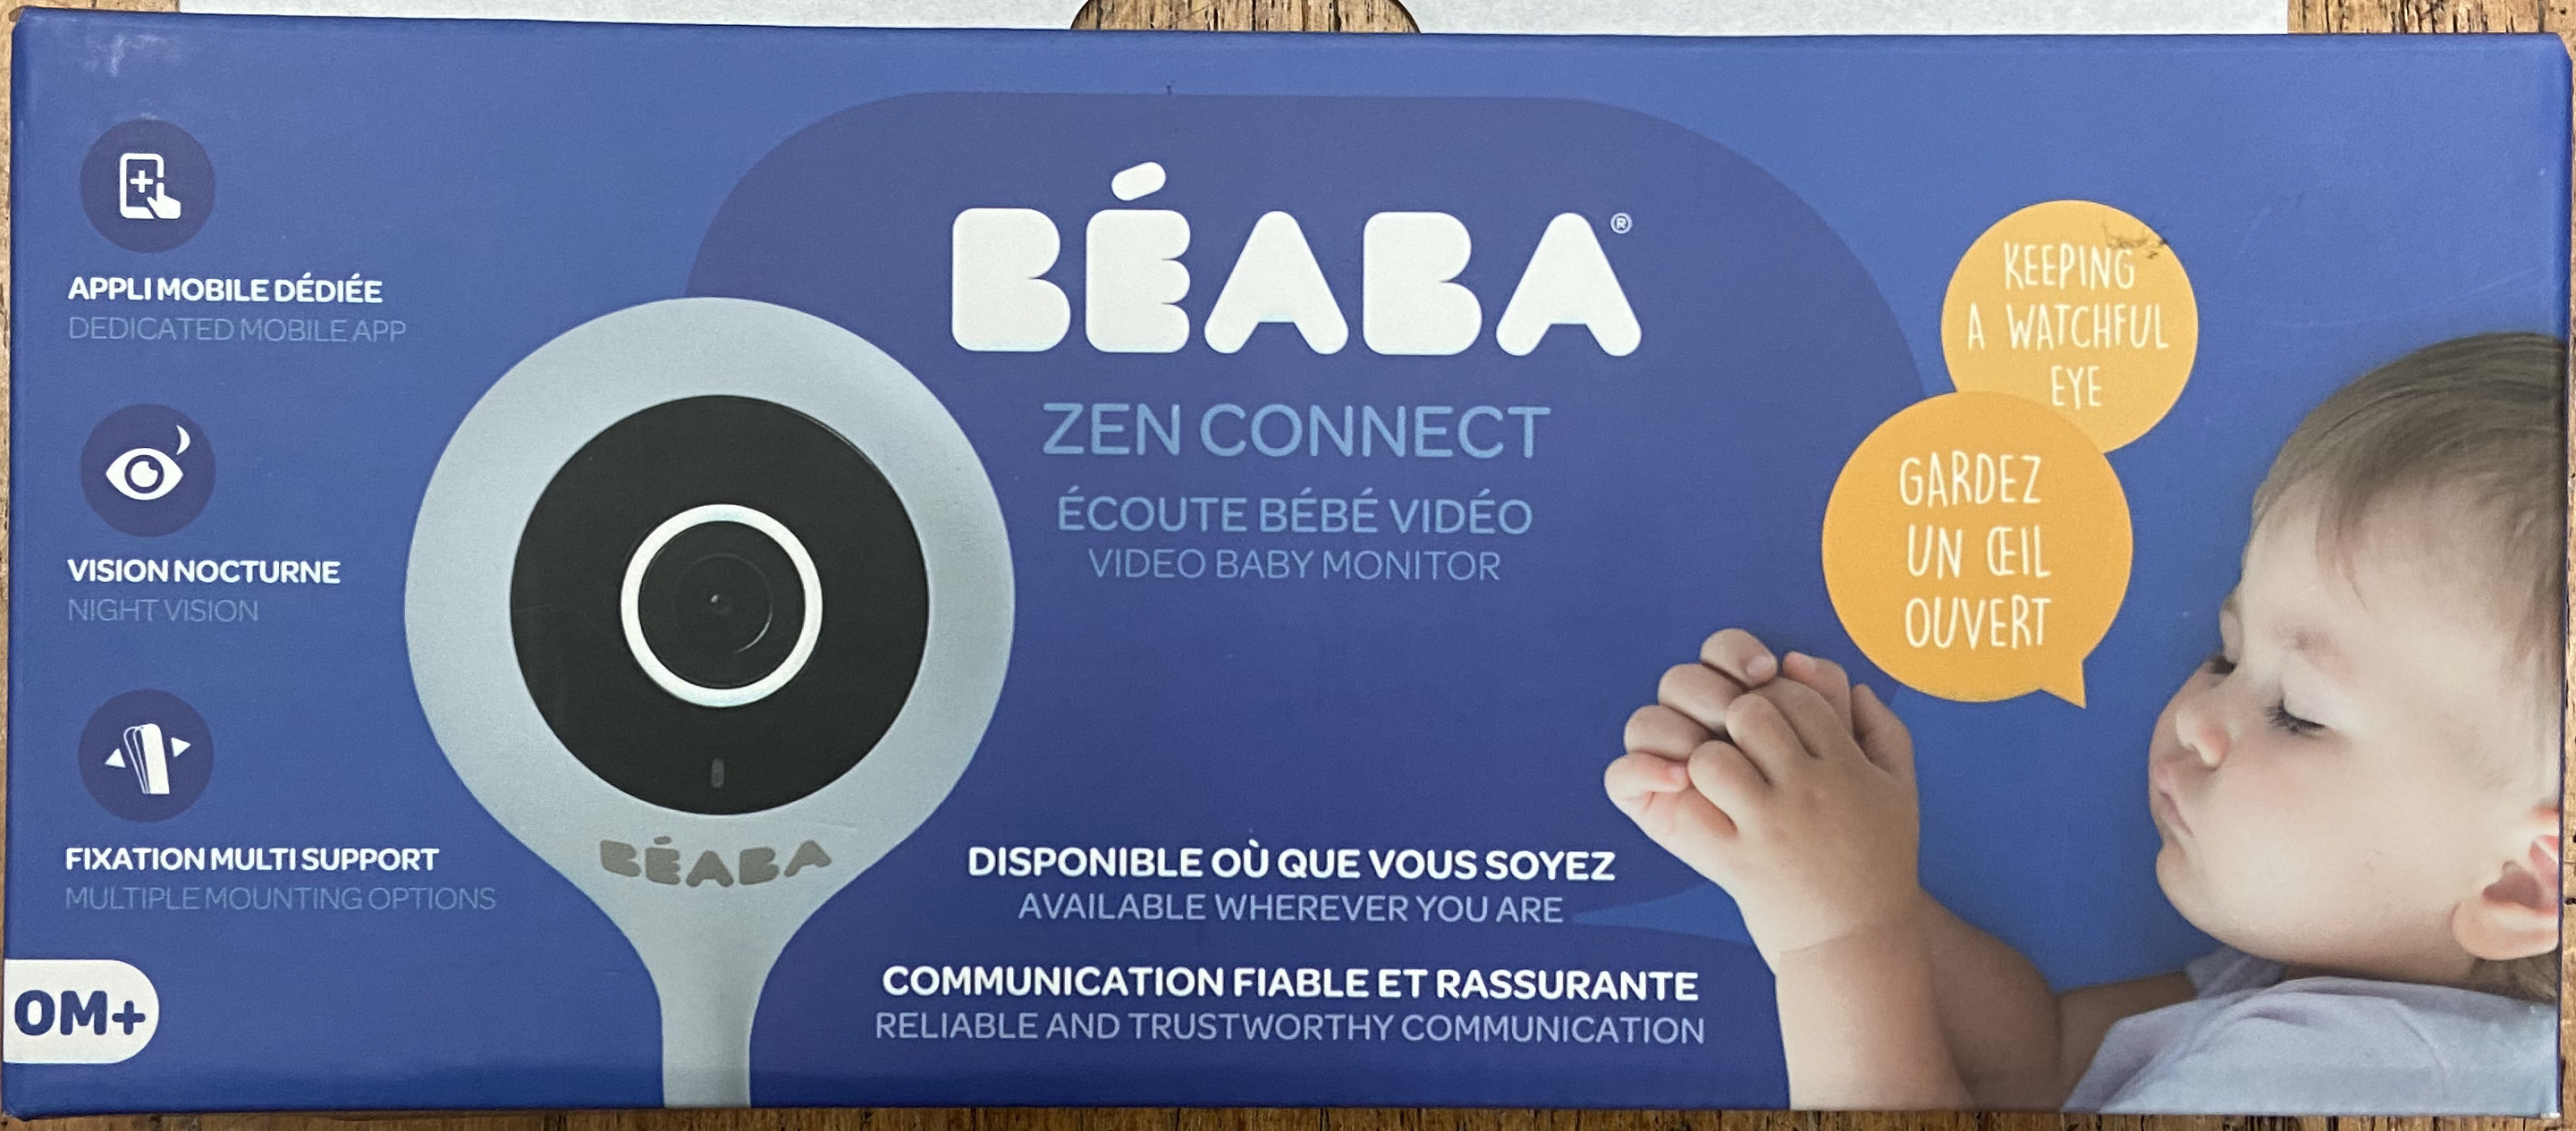 Babyphone Zen Connect - Night Blue - Béaba